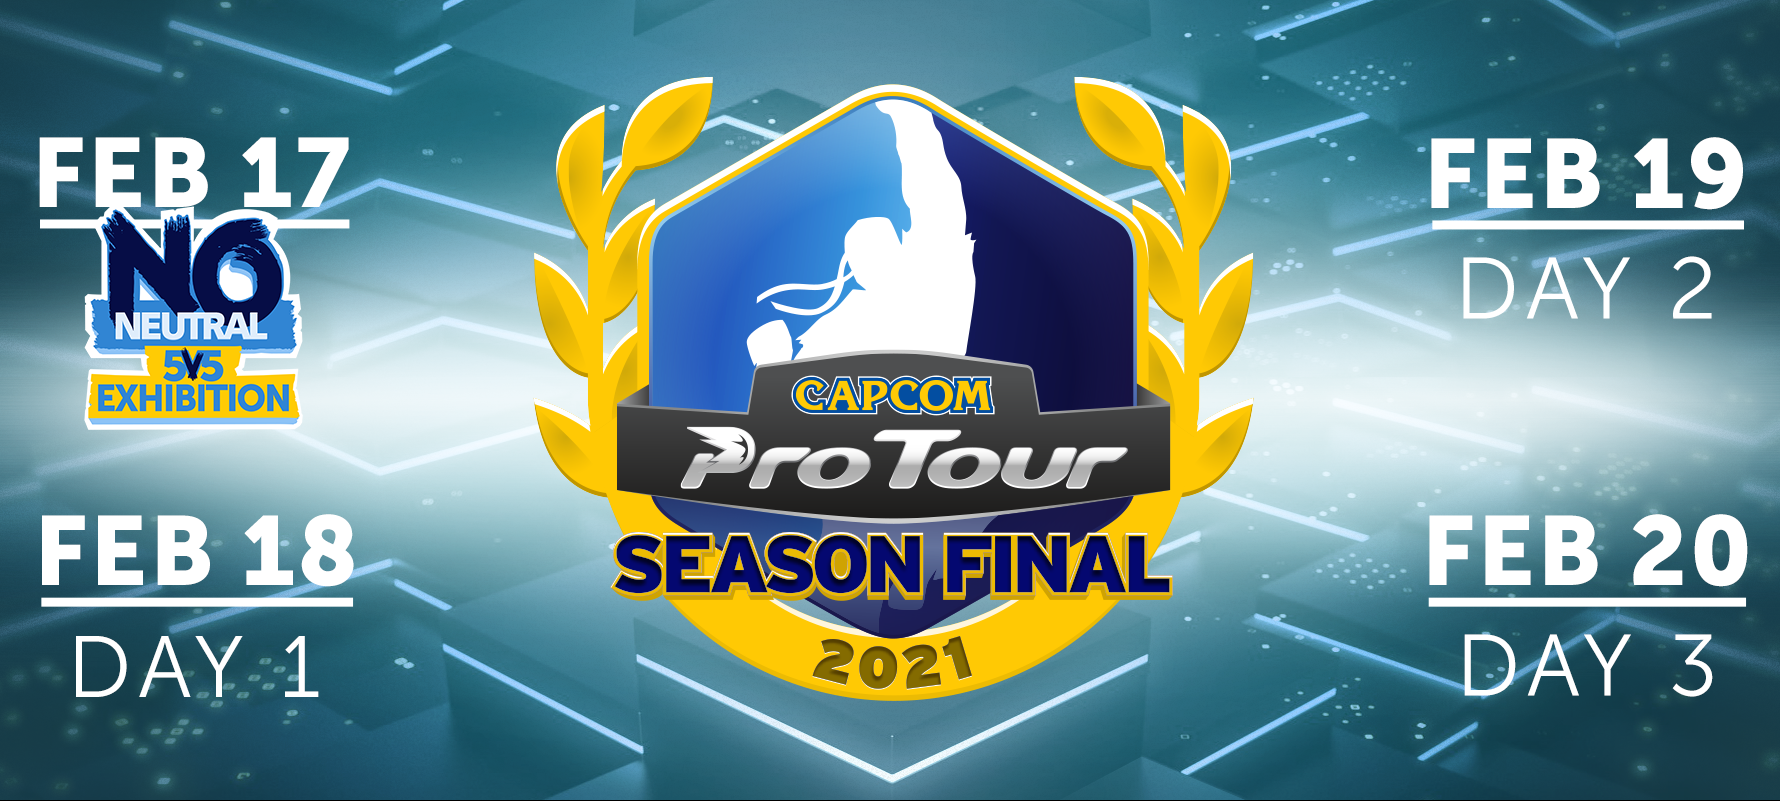 Arby’s to sponsor Capcom Pro Tour 2021 Season Final, Nexus Gaming LLC